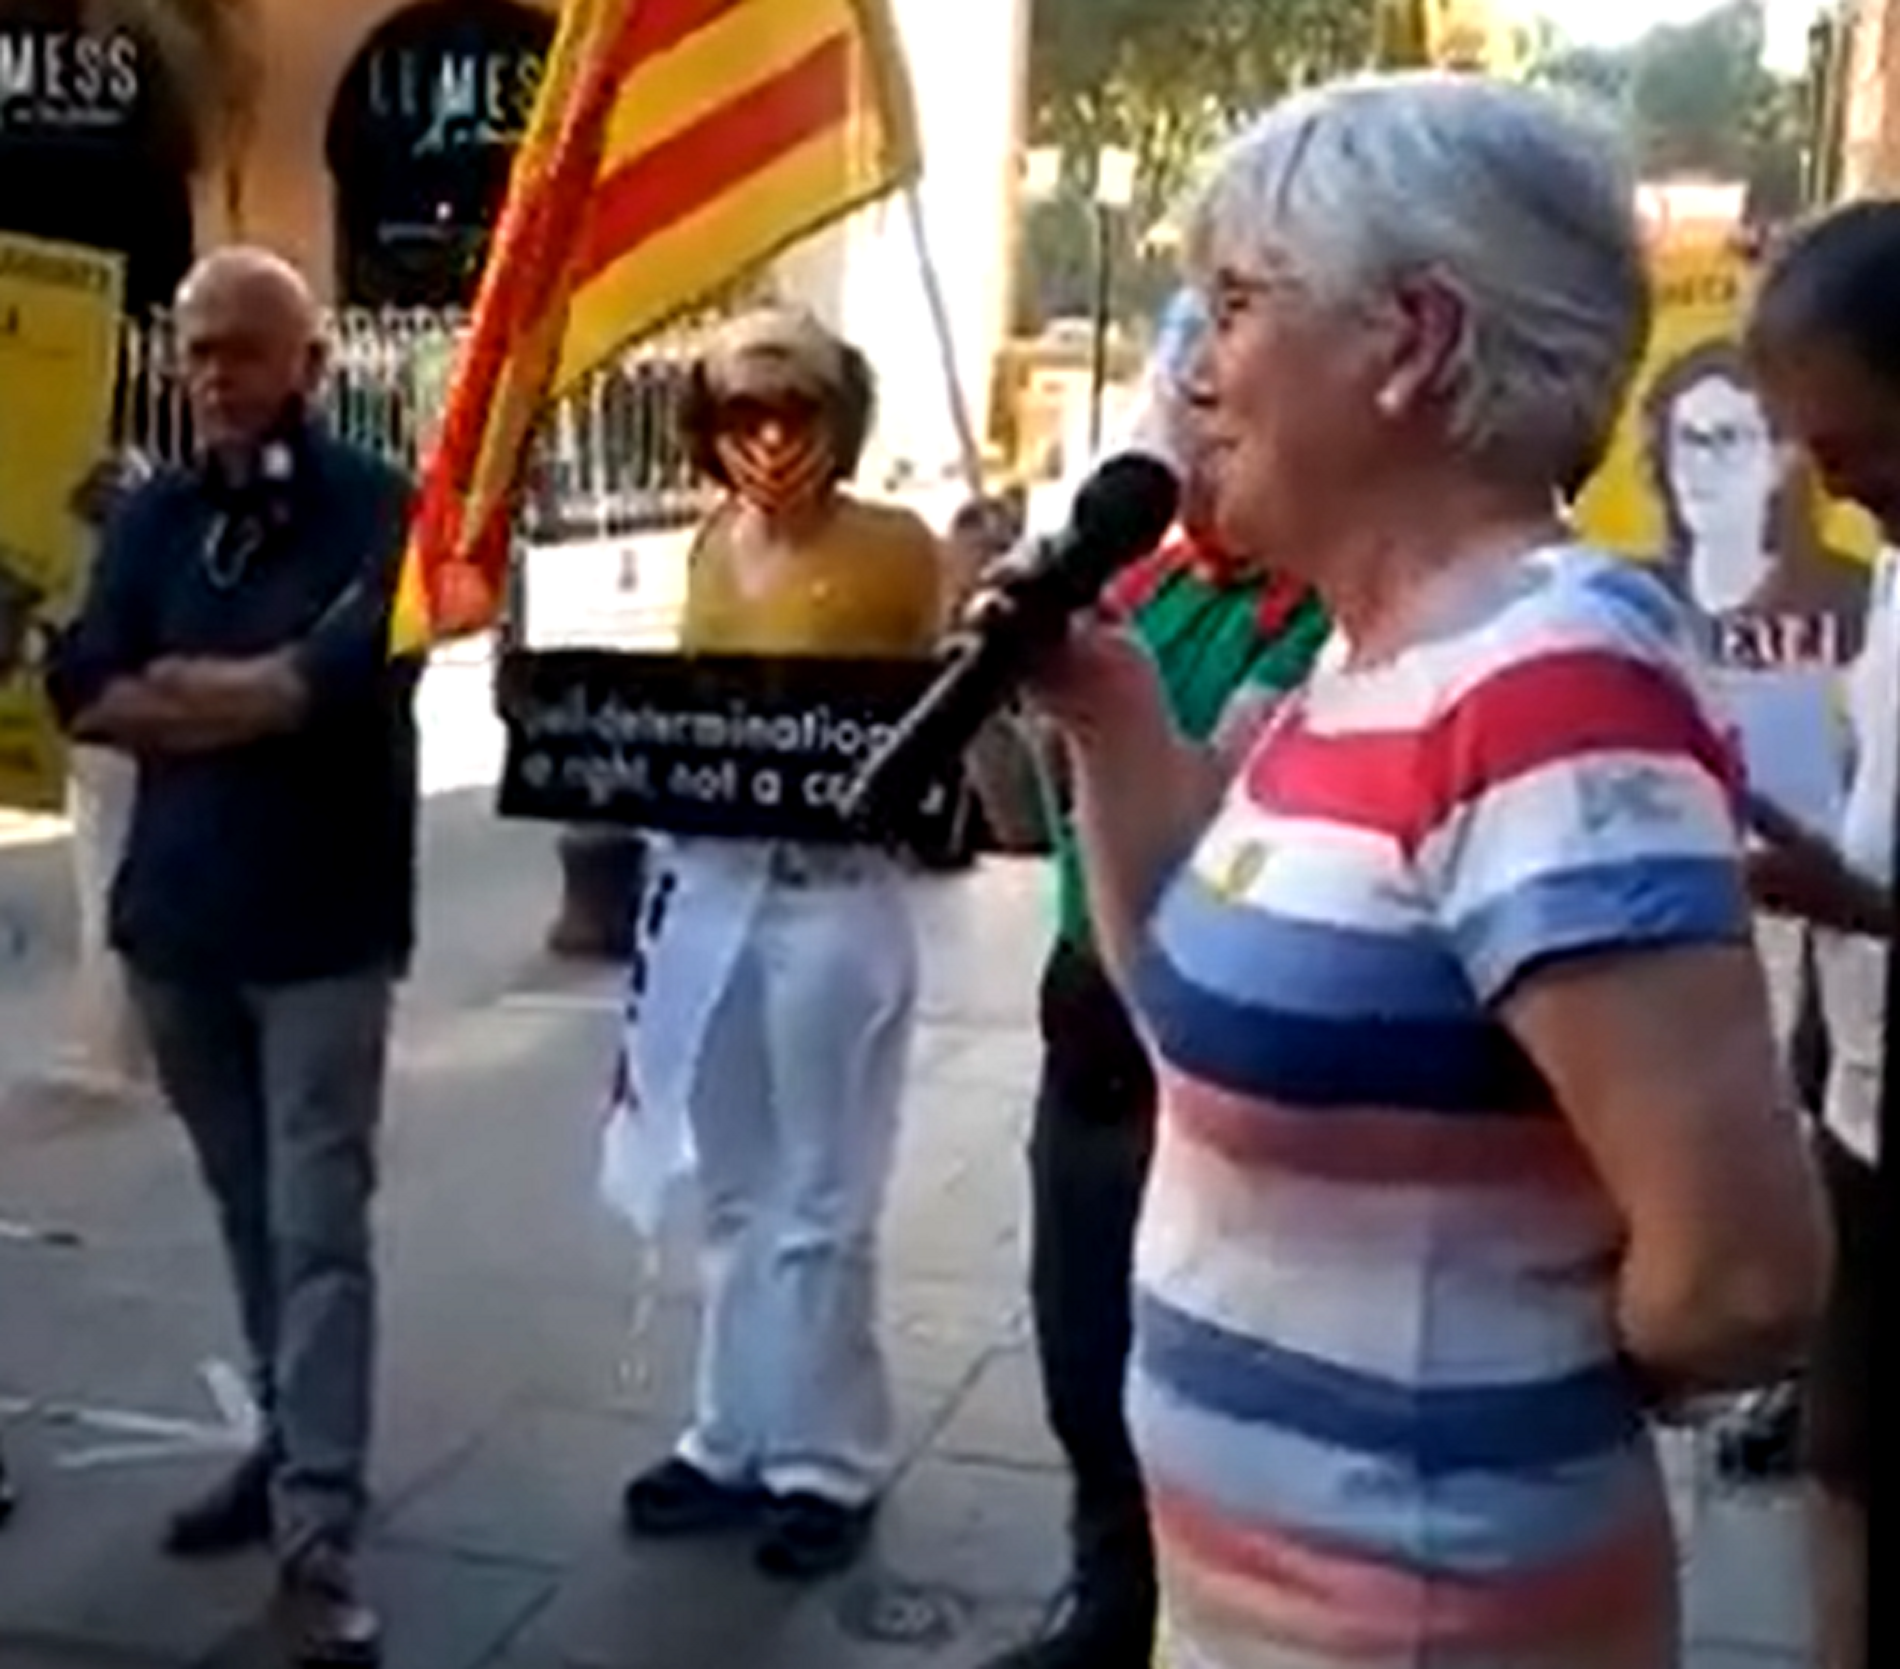 Clara Ponsatí returns to Perpinyà: "We won't stop until we win"